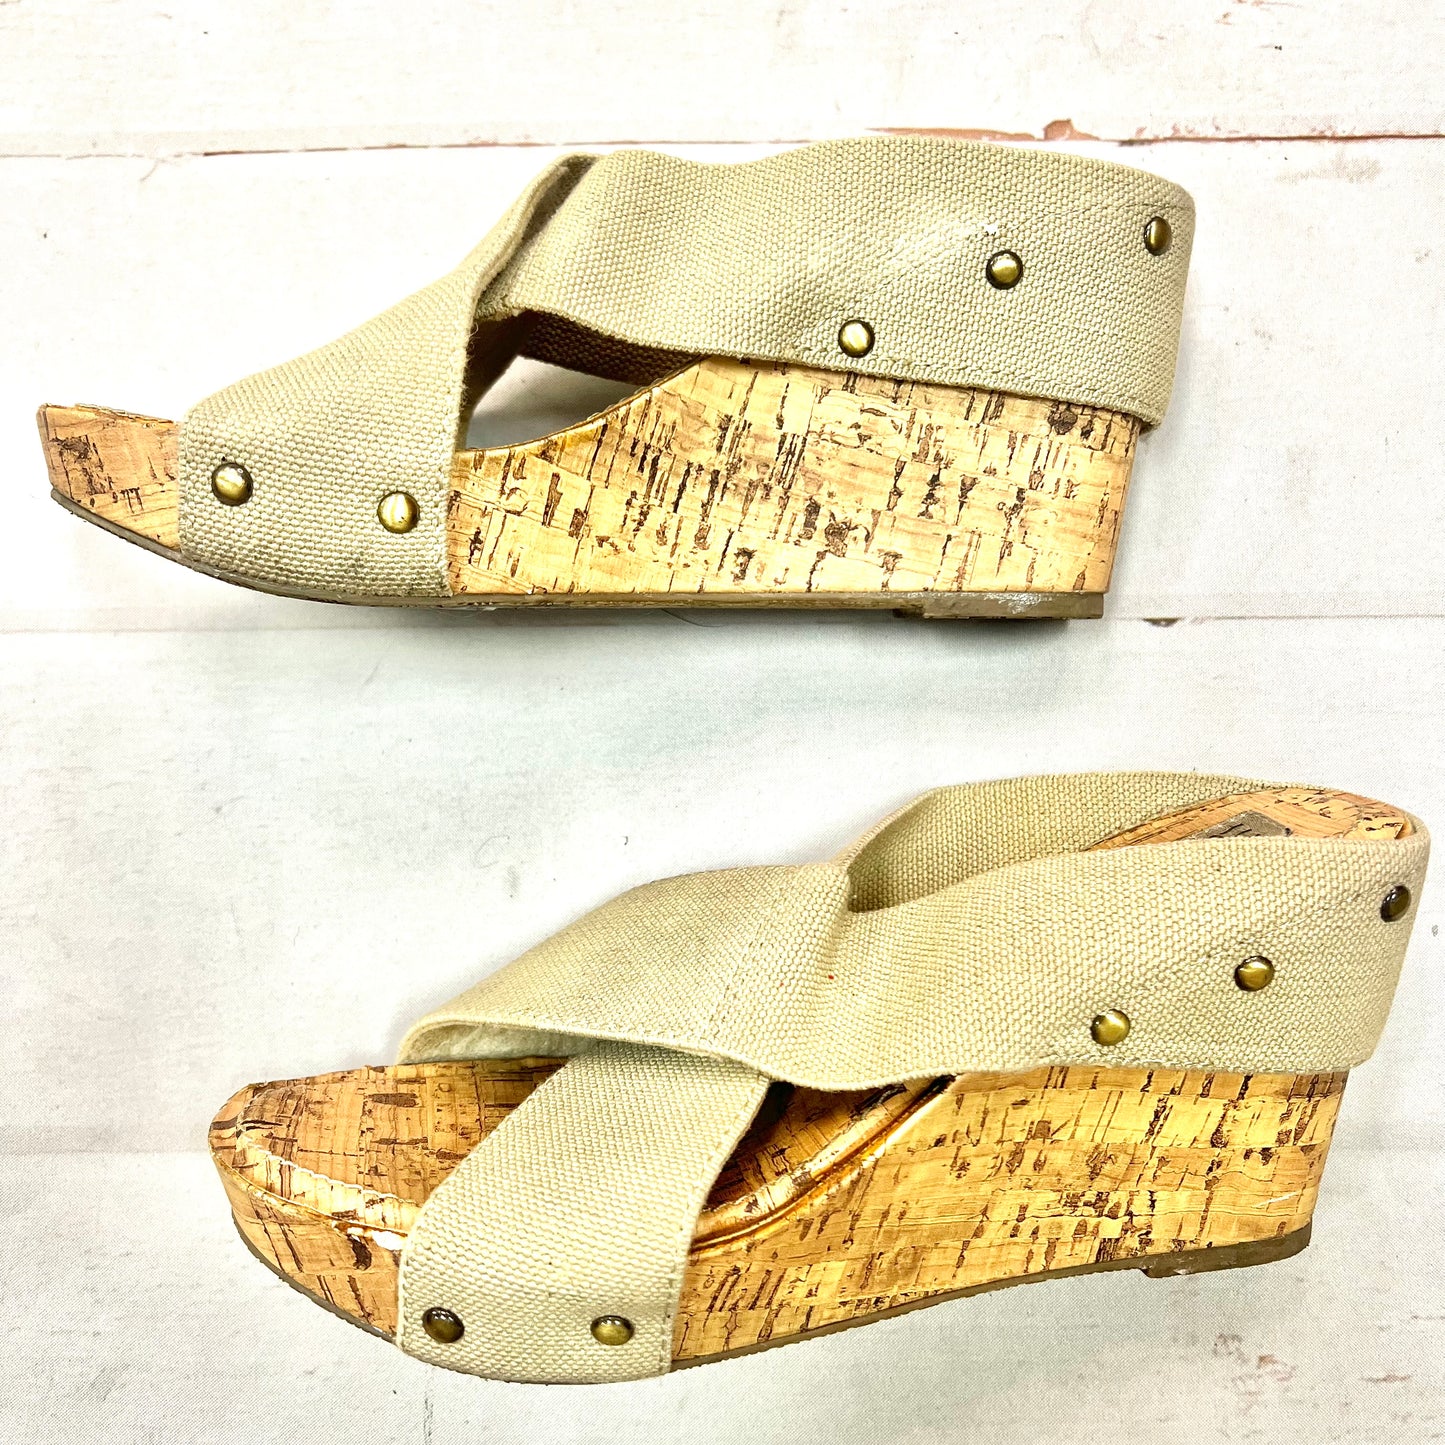 Sandals Heels Wedge By Esprit  Size: 8